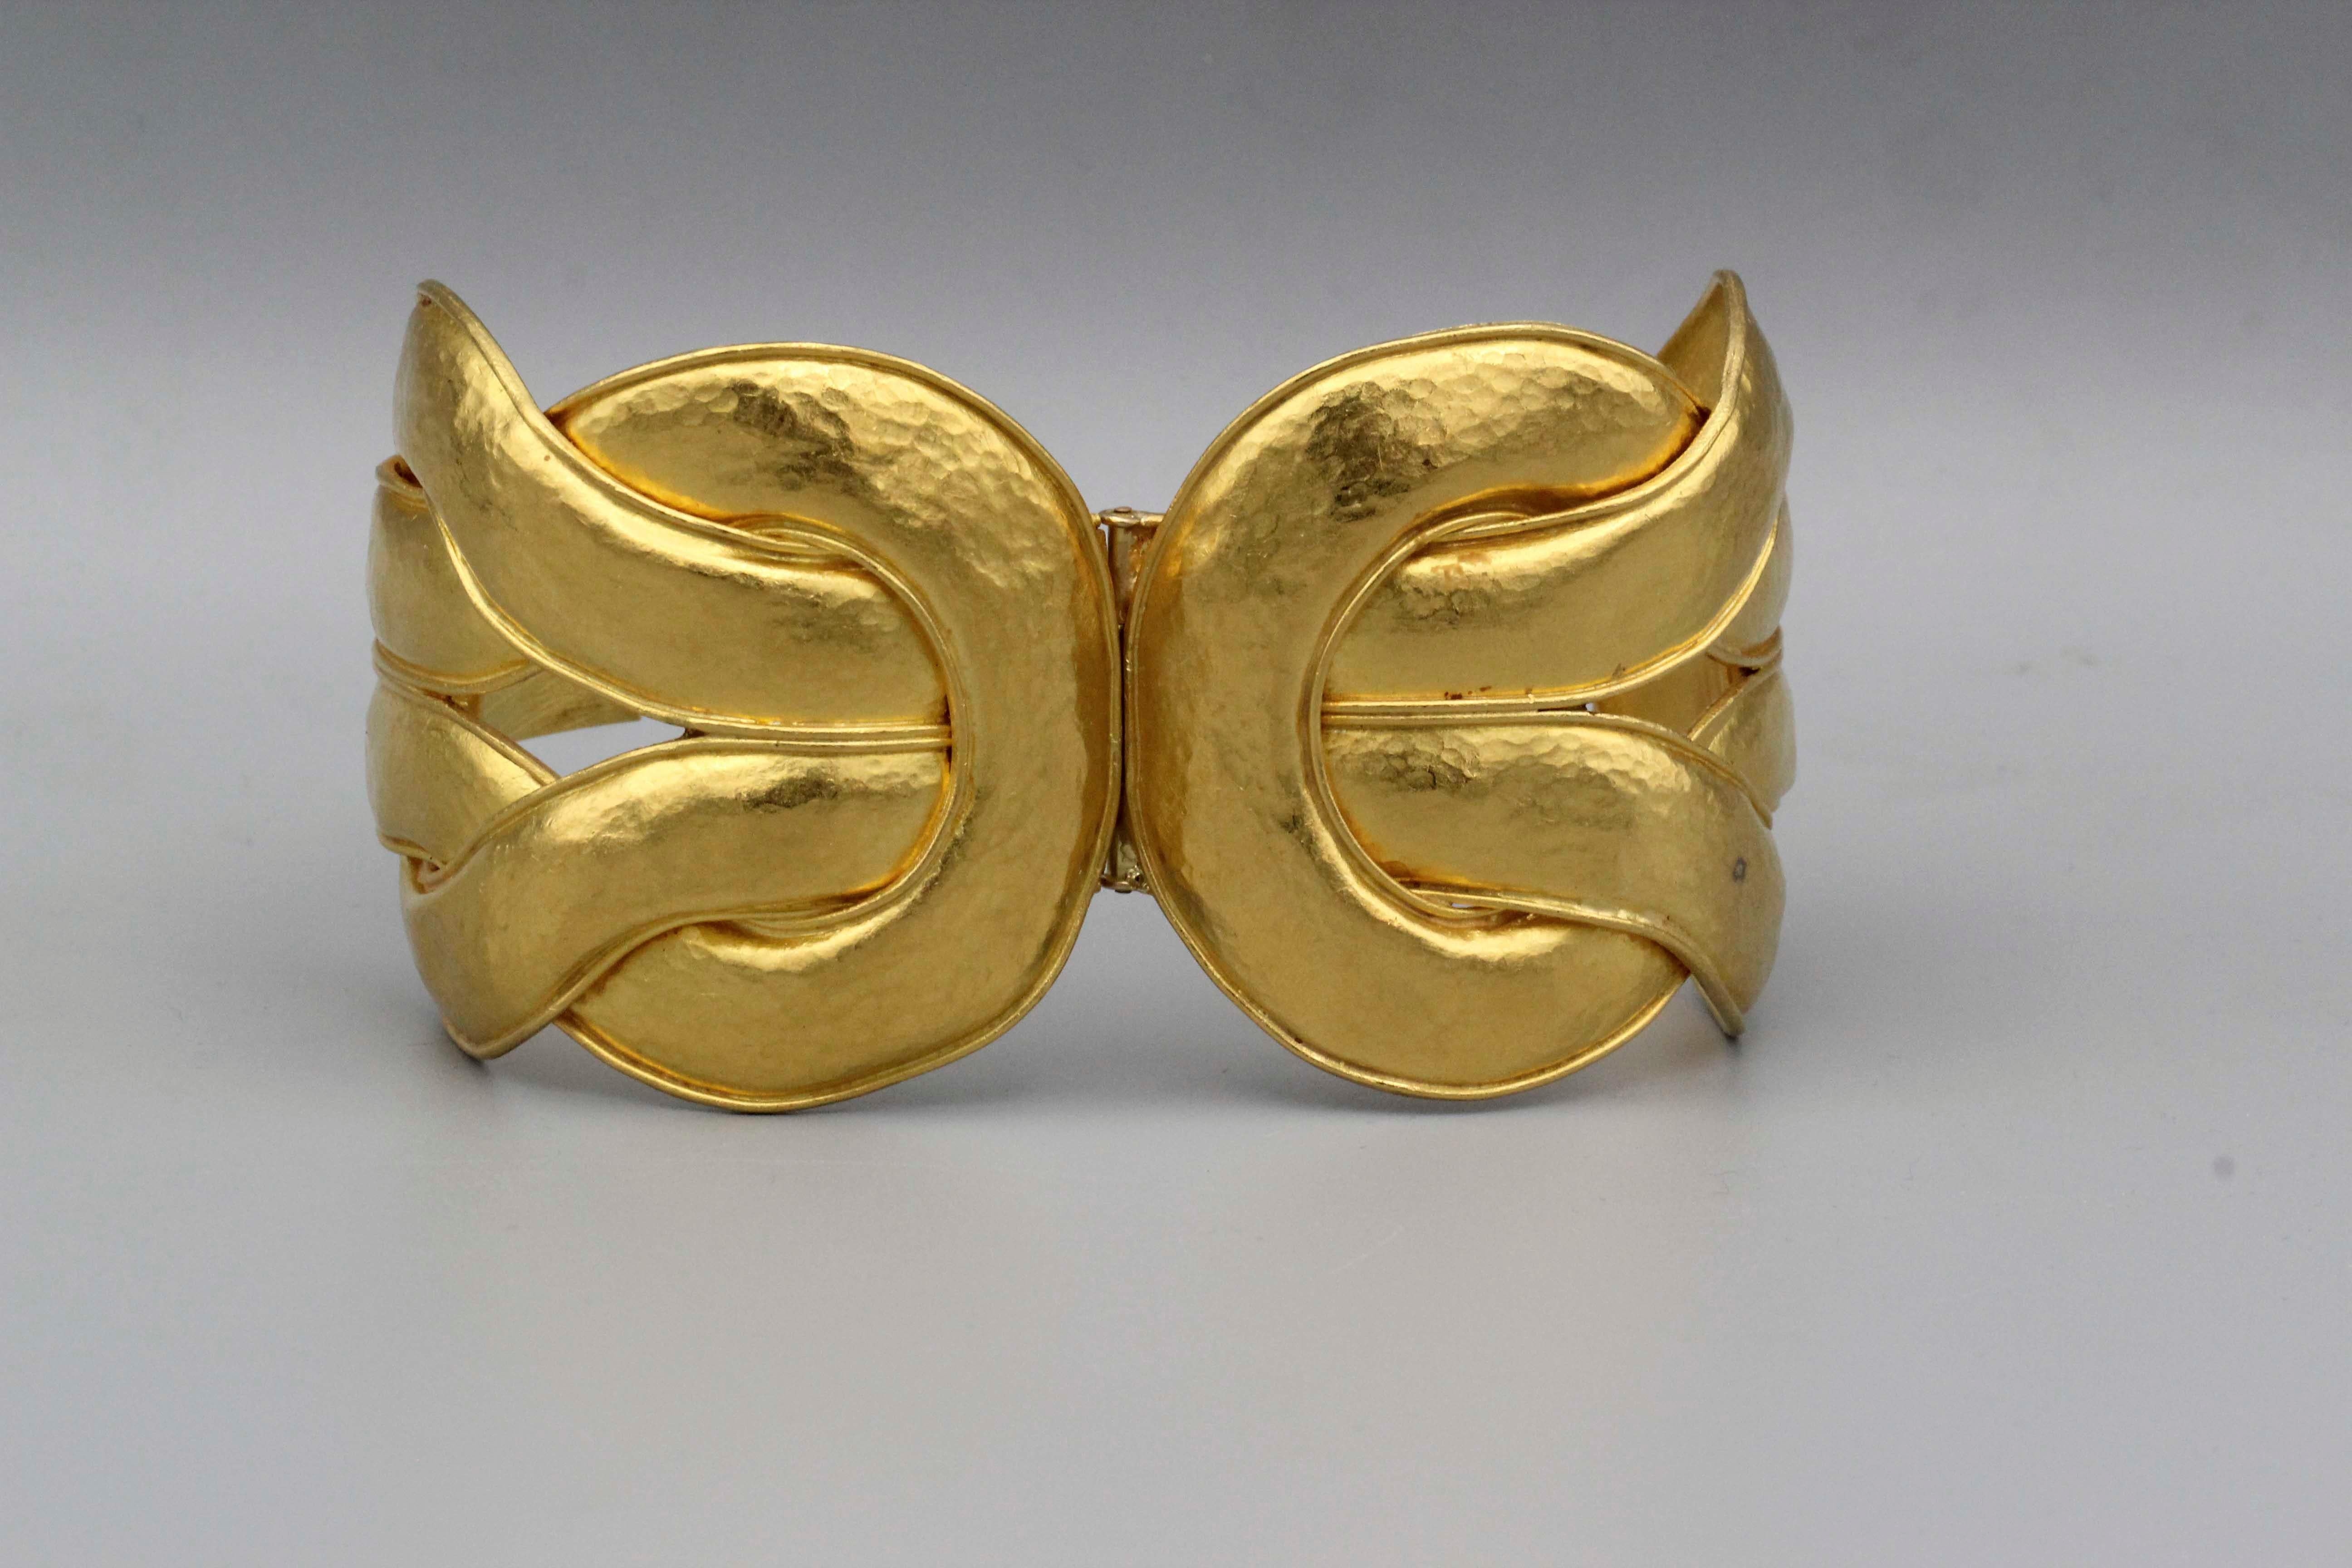 Women's Hilat 24k Yellow Gold Heracles Cuff Bracelet